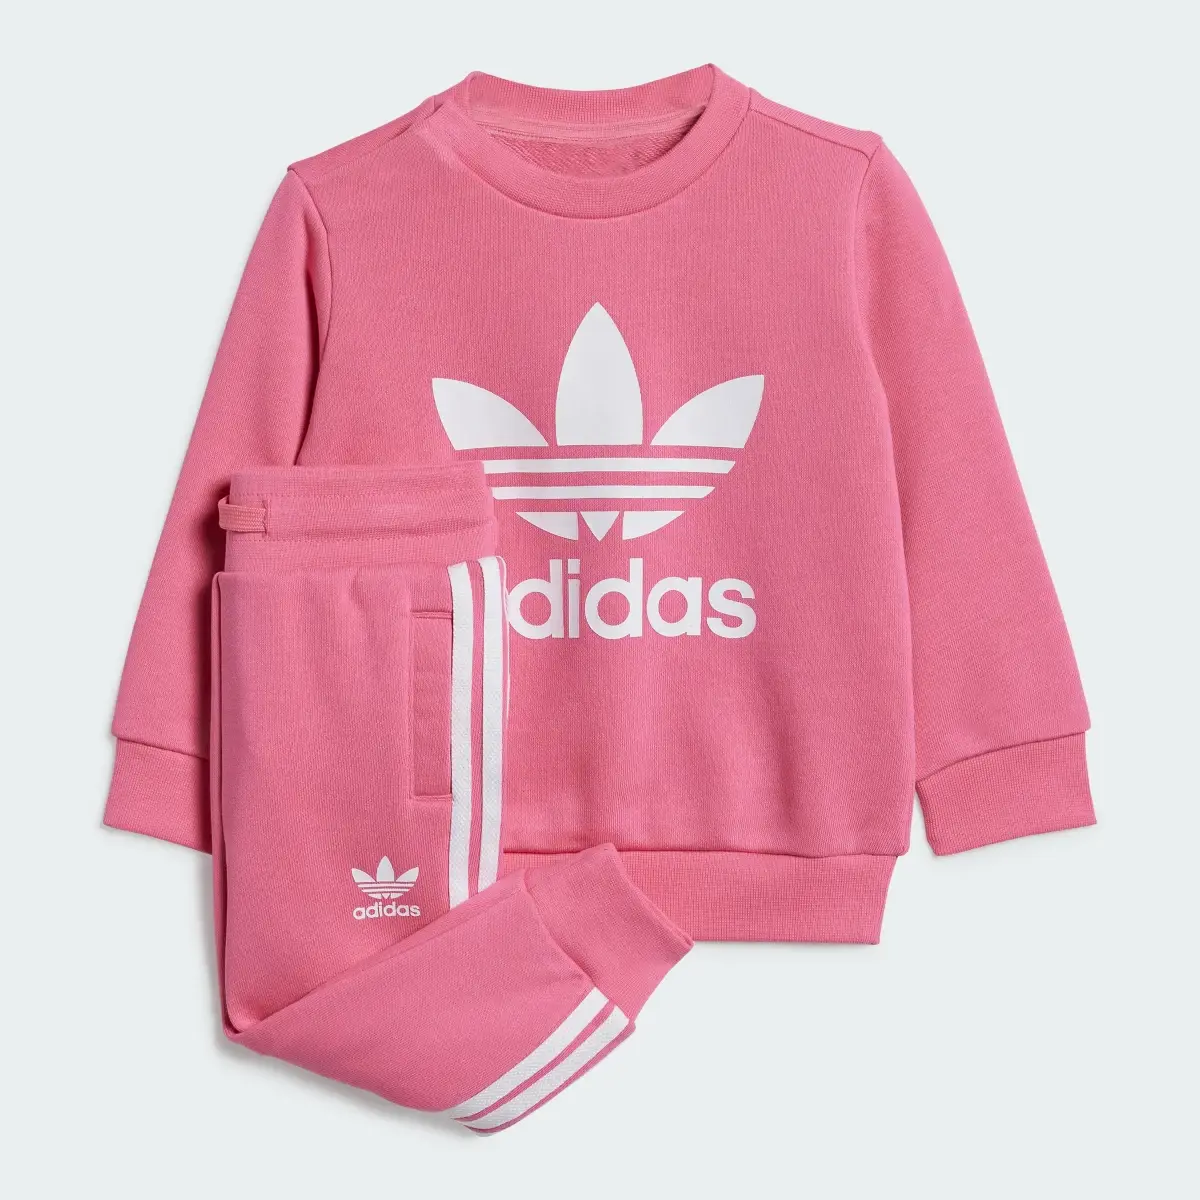 Adidas Crew Sweatshirt Set. 2